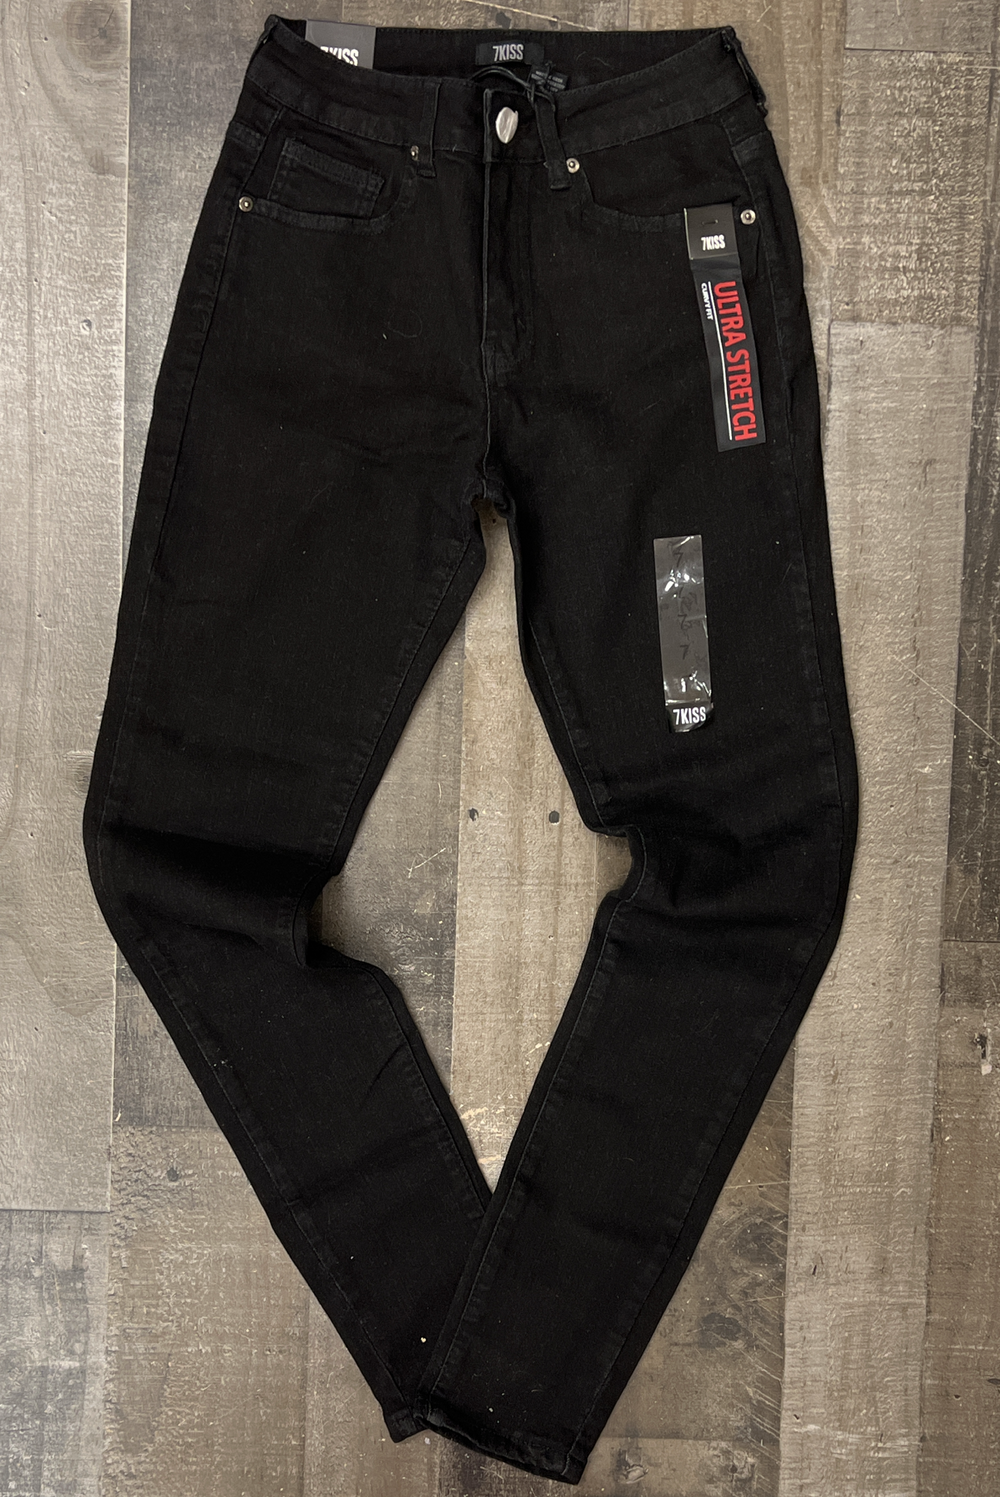 7Kiss - Black jeans (womens)